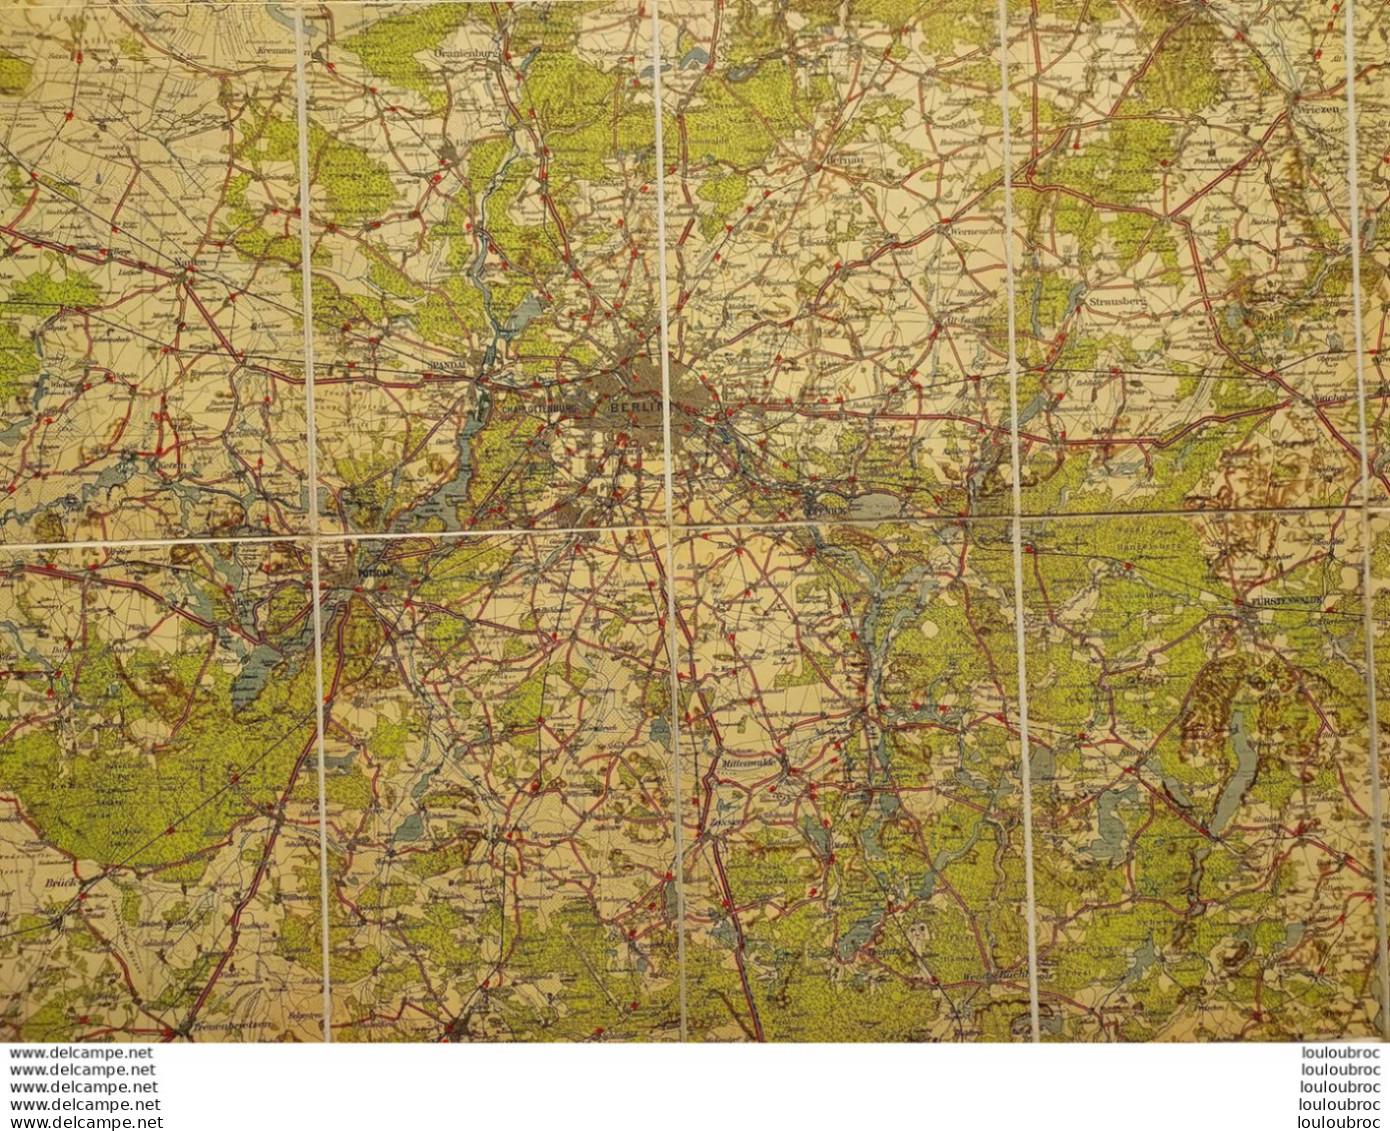 CARTE TOILEE BRANDENBURG PHARUSKARTE FORMAT 109 X 80 CM - Landkarten